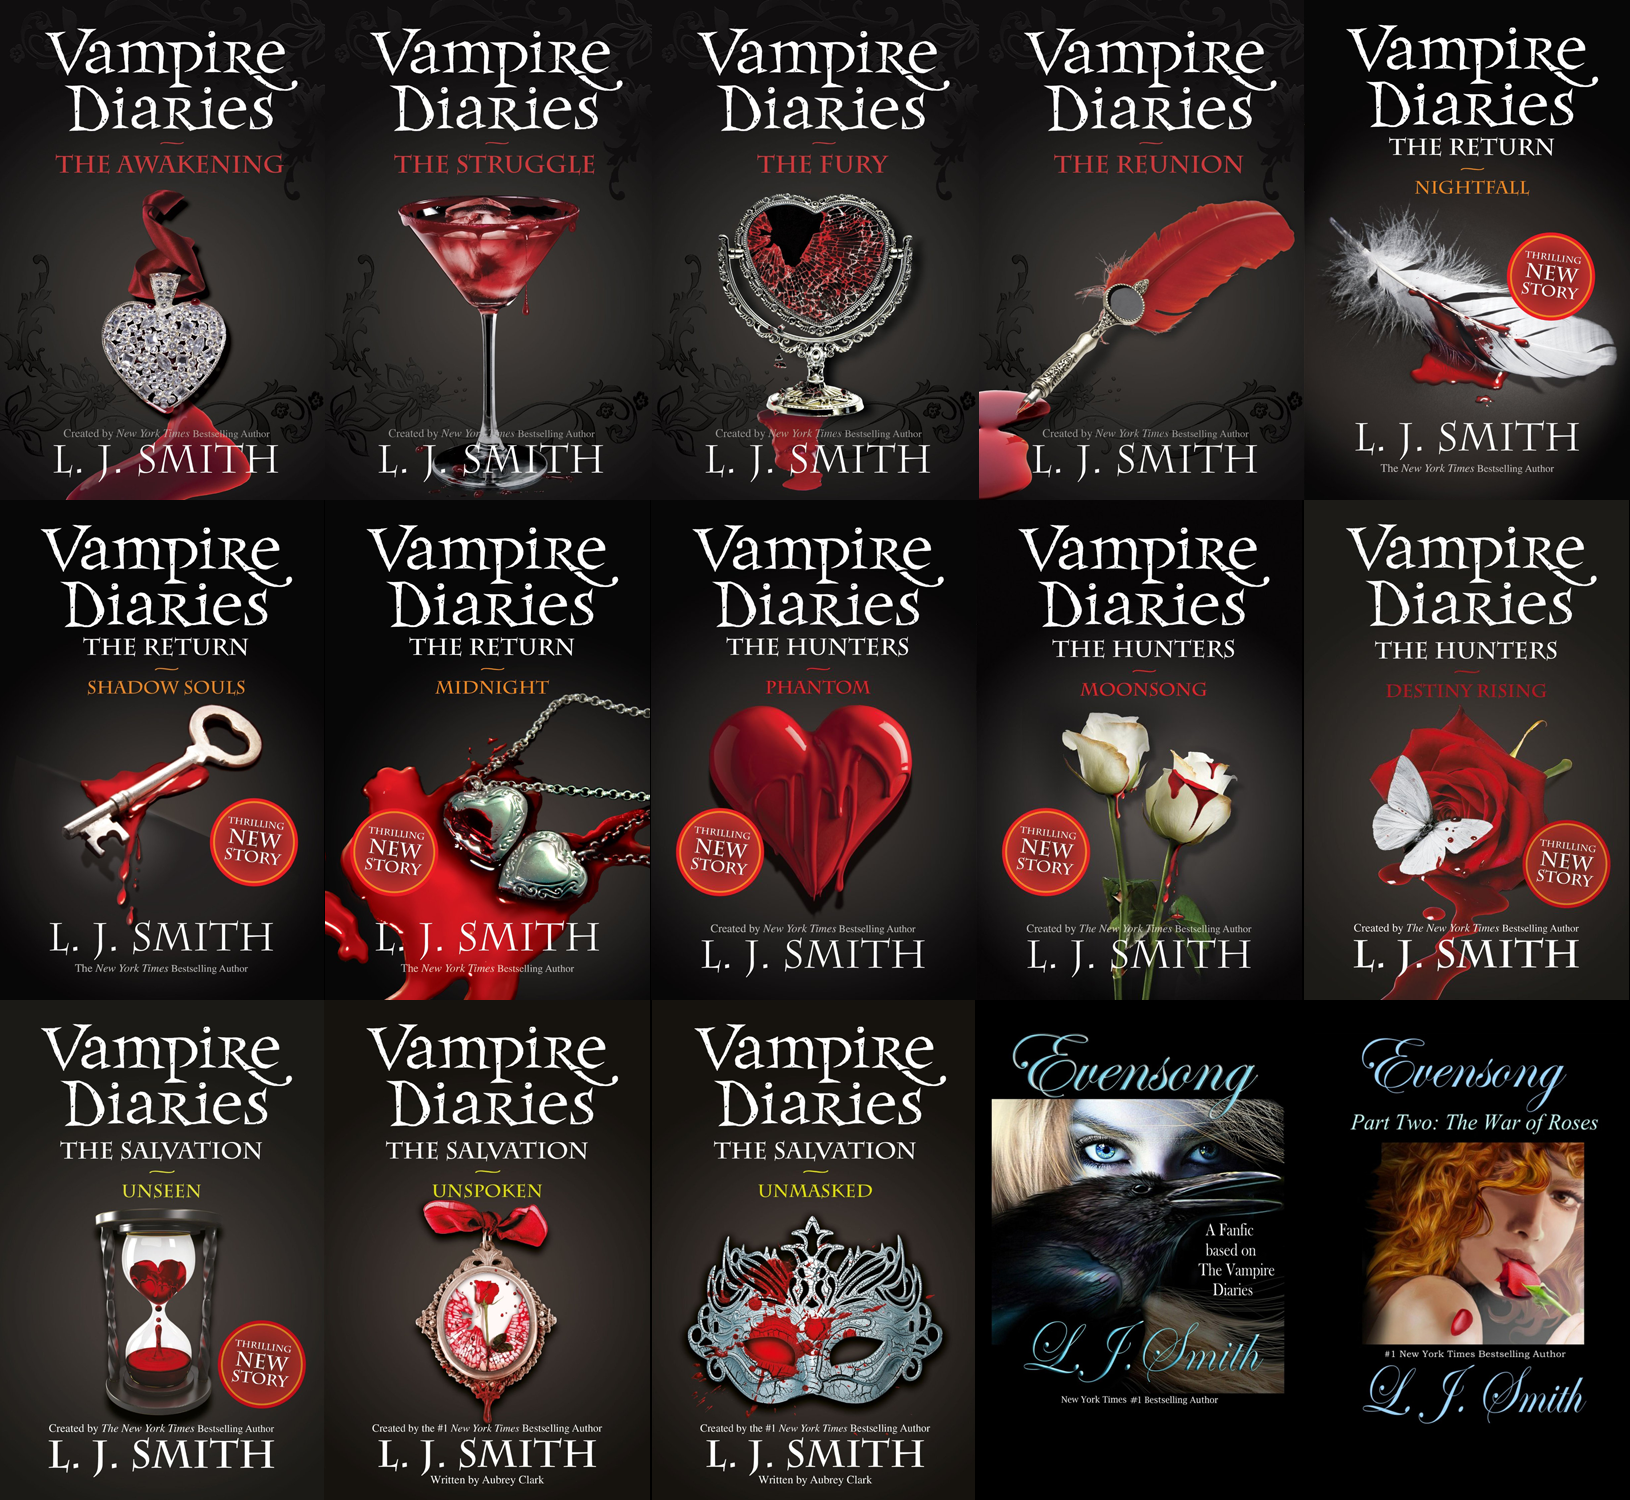 The Vampire Diaries (novel series) - The Vampire Diaries Wiki - Wikia